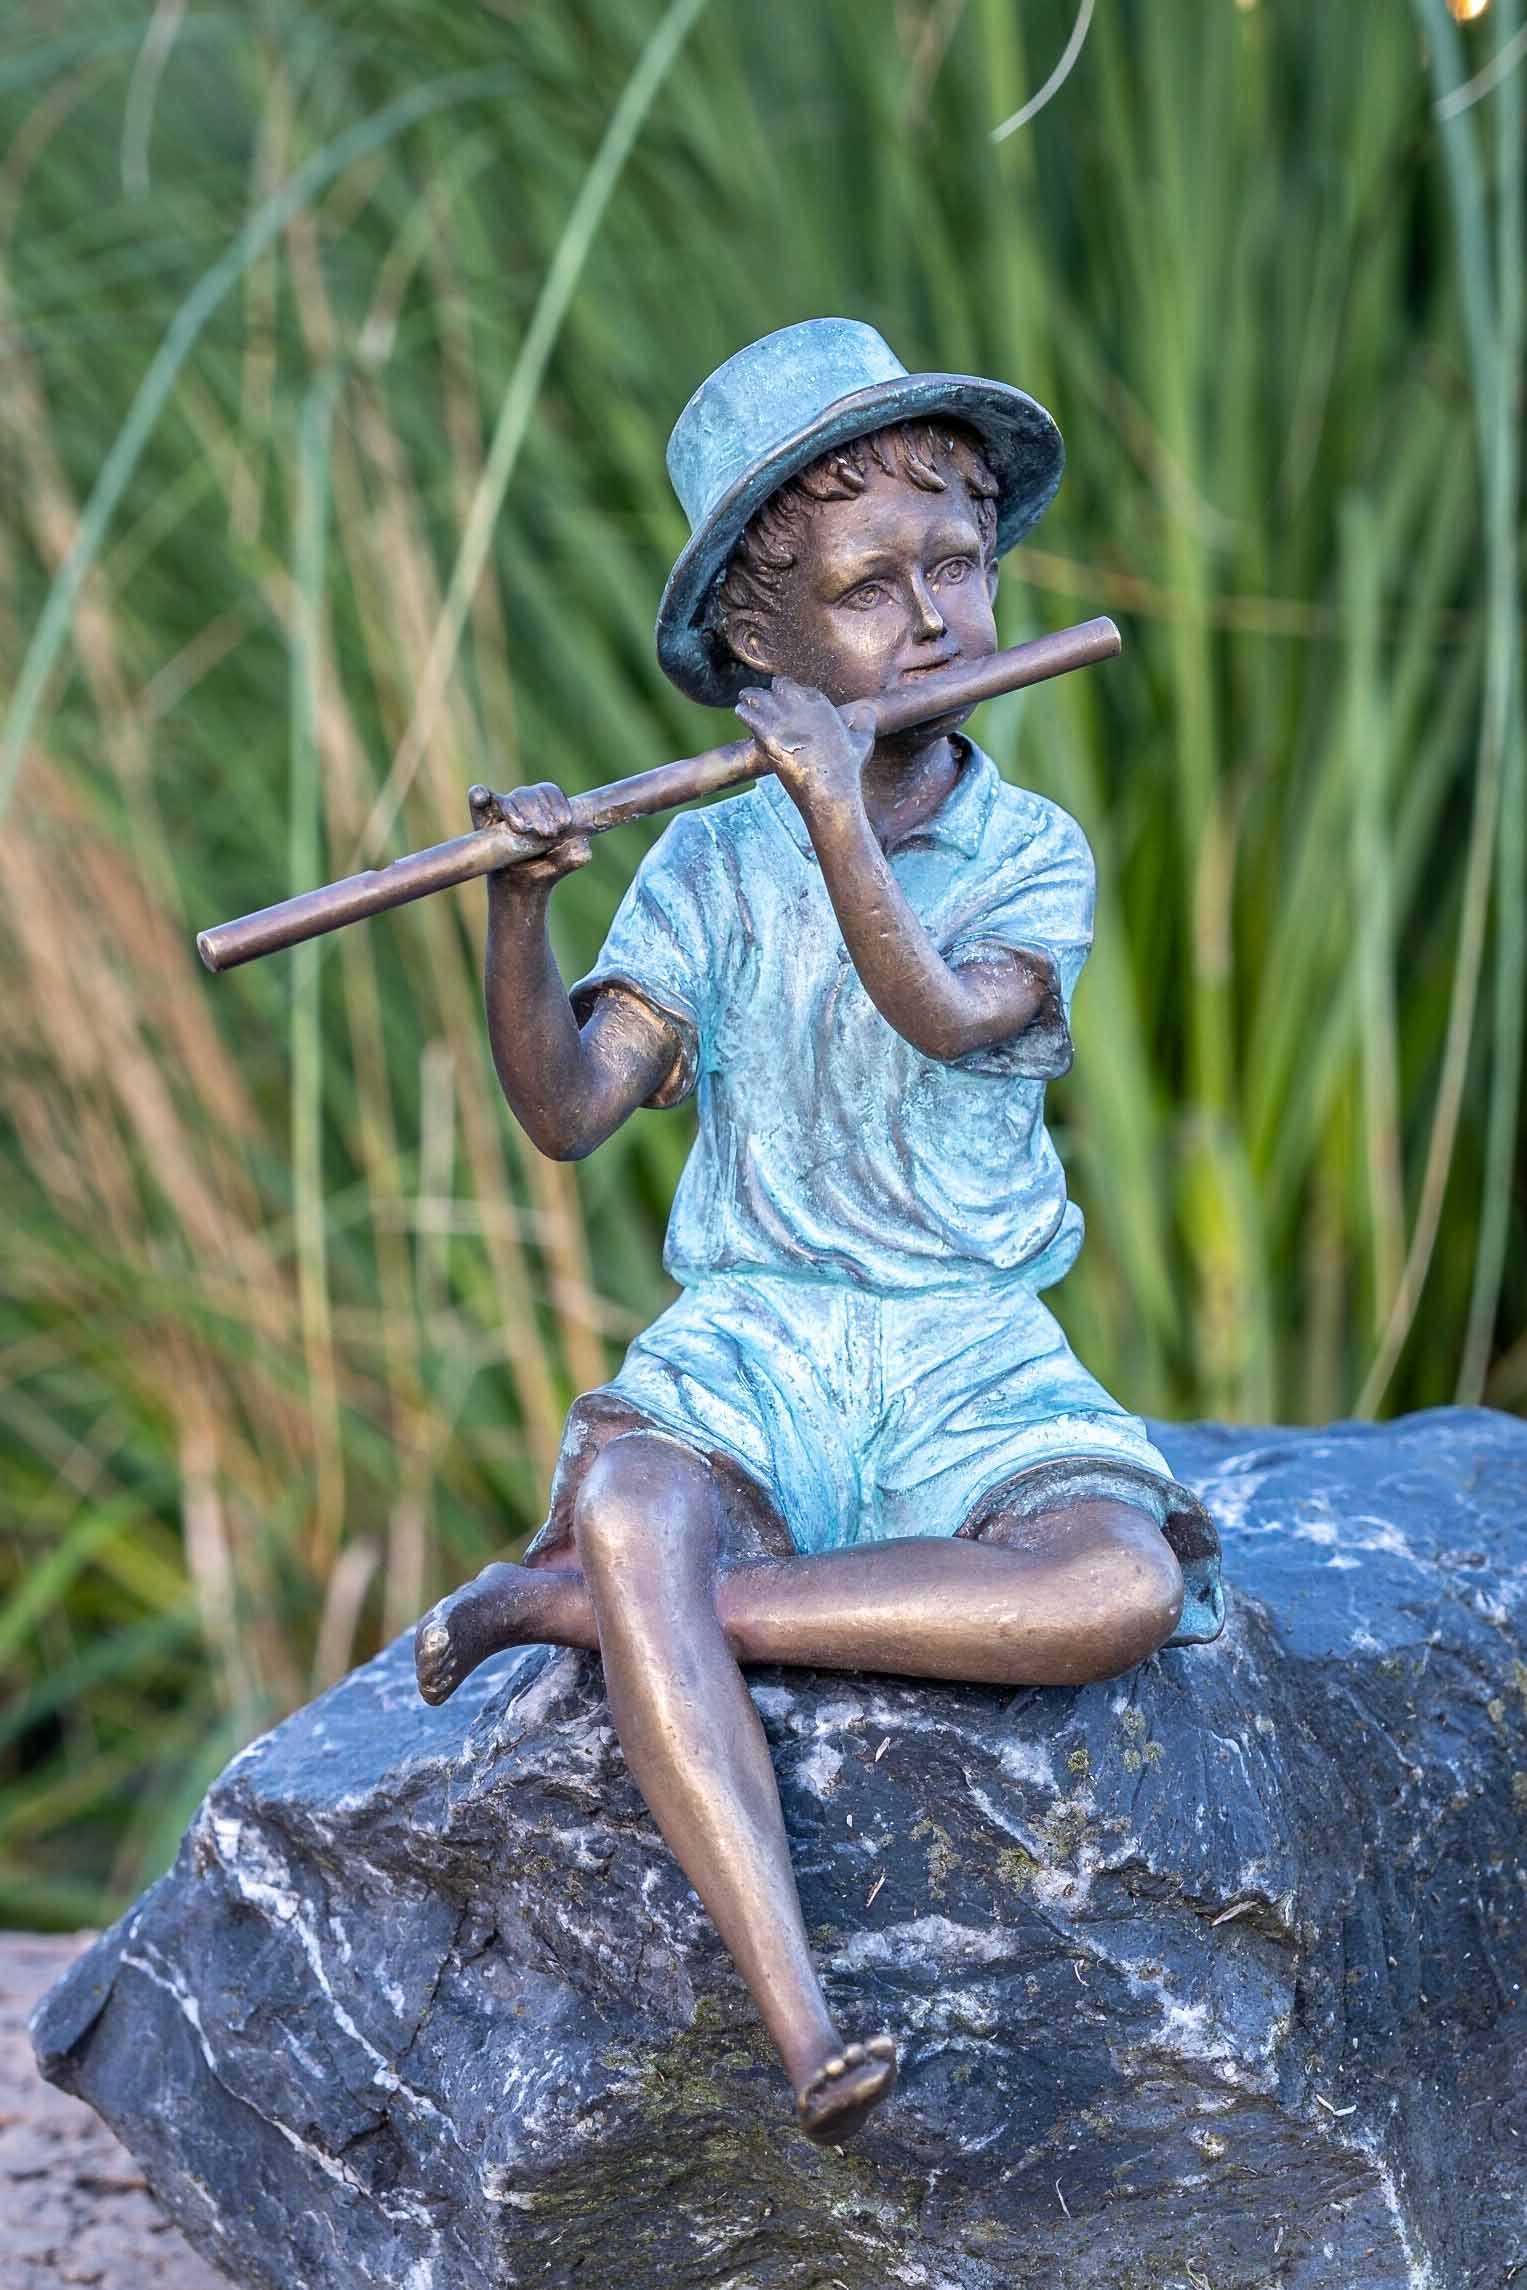 IDYL Gartenfigur mit Junge Bronze IDYL Flöte, Bronze-Skulptur